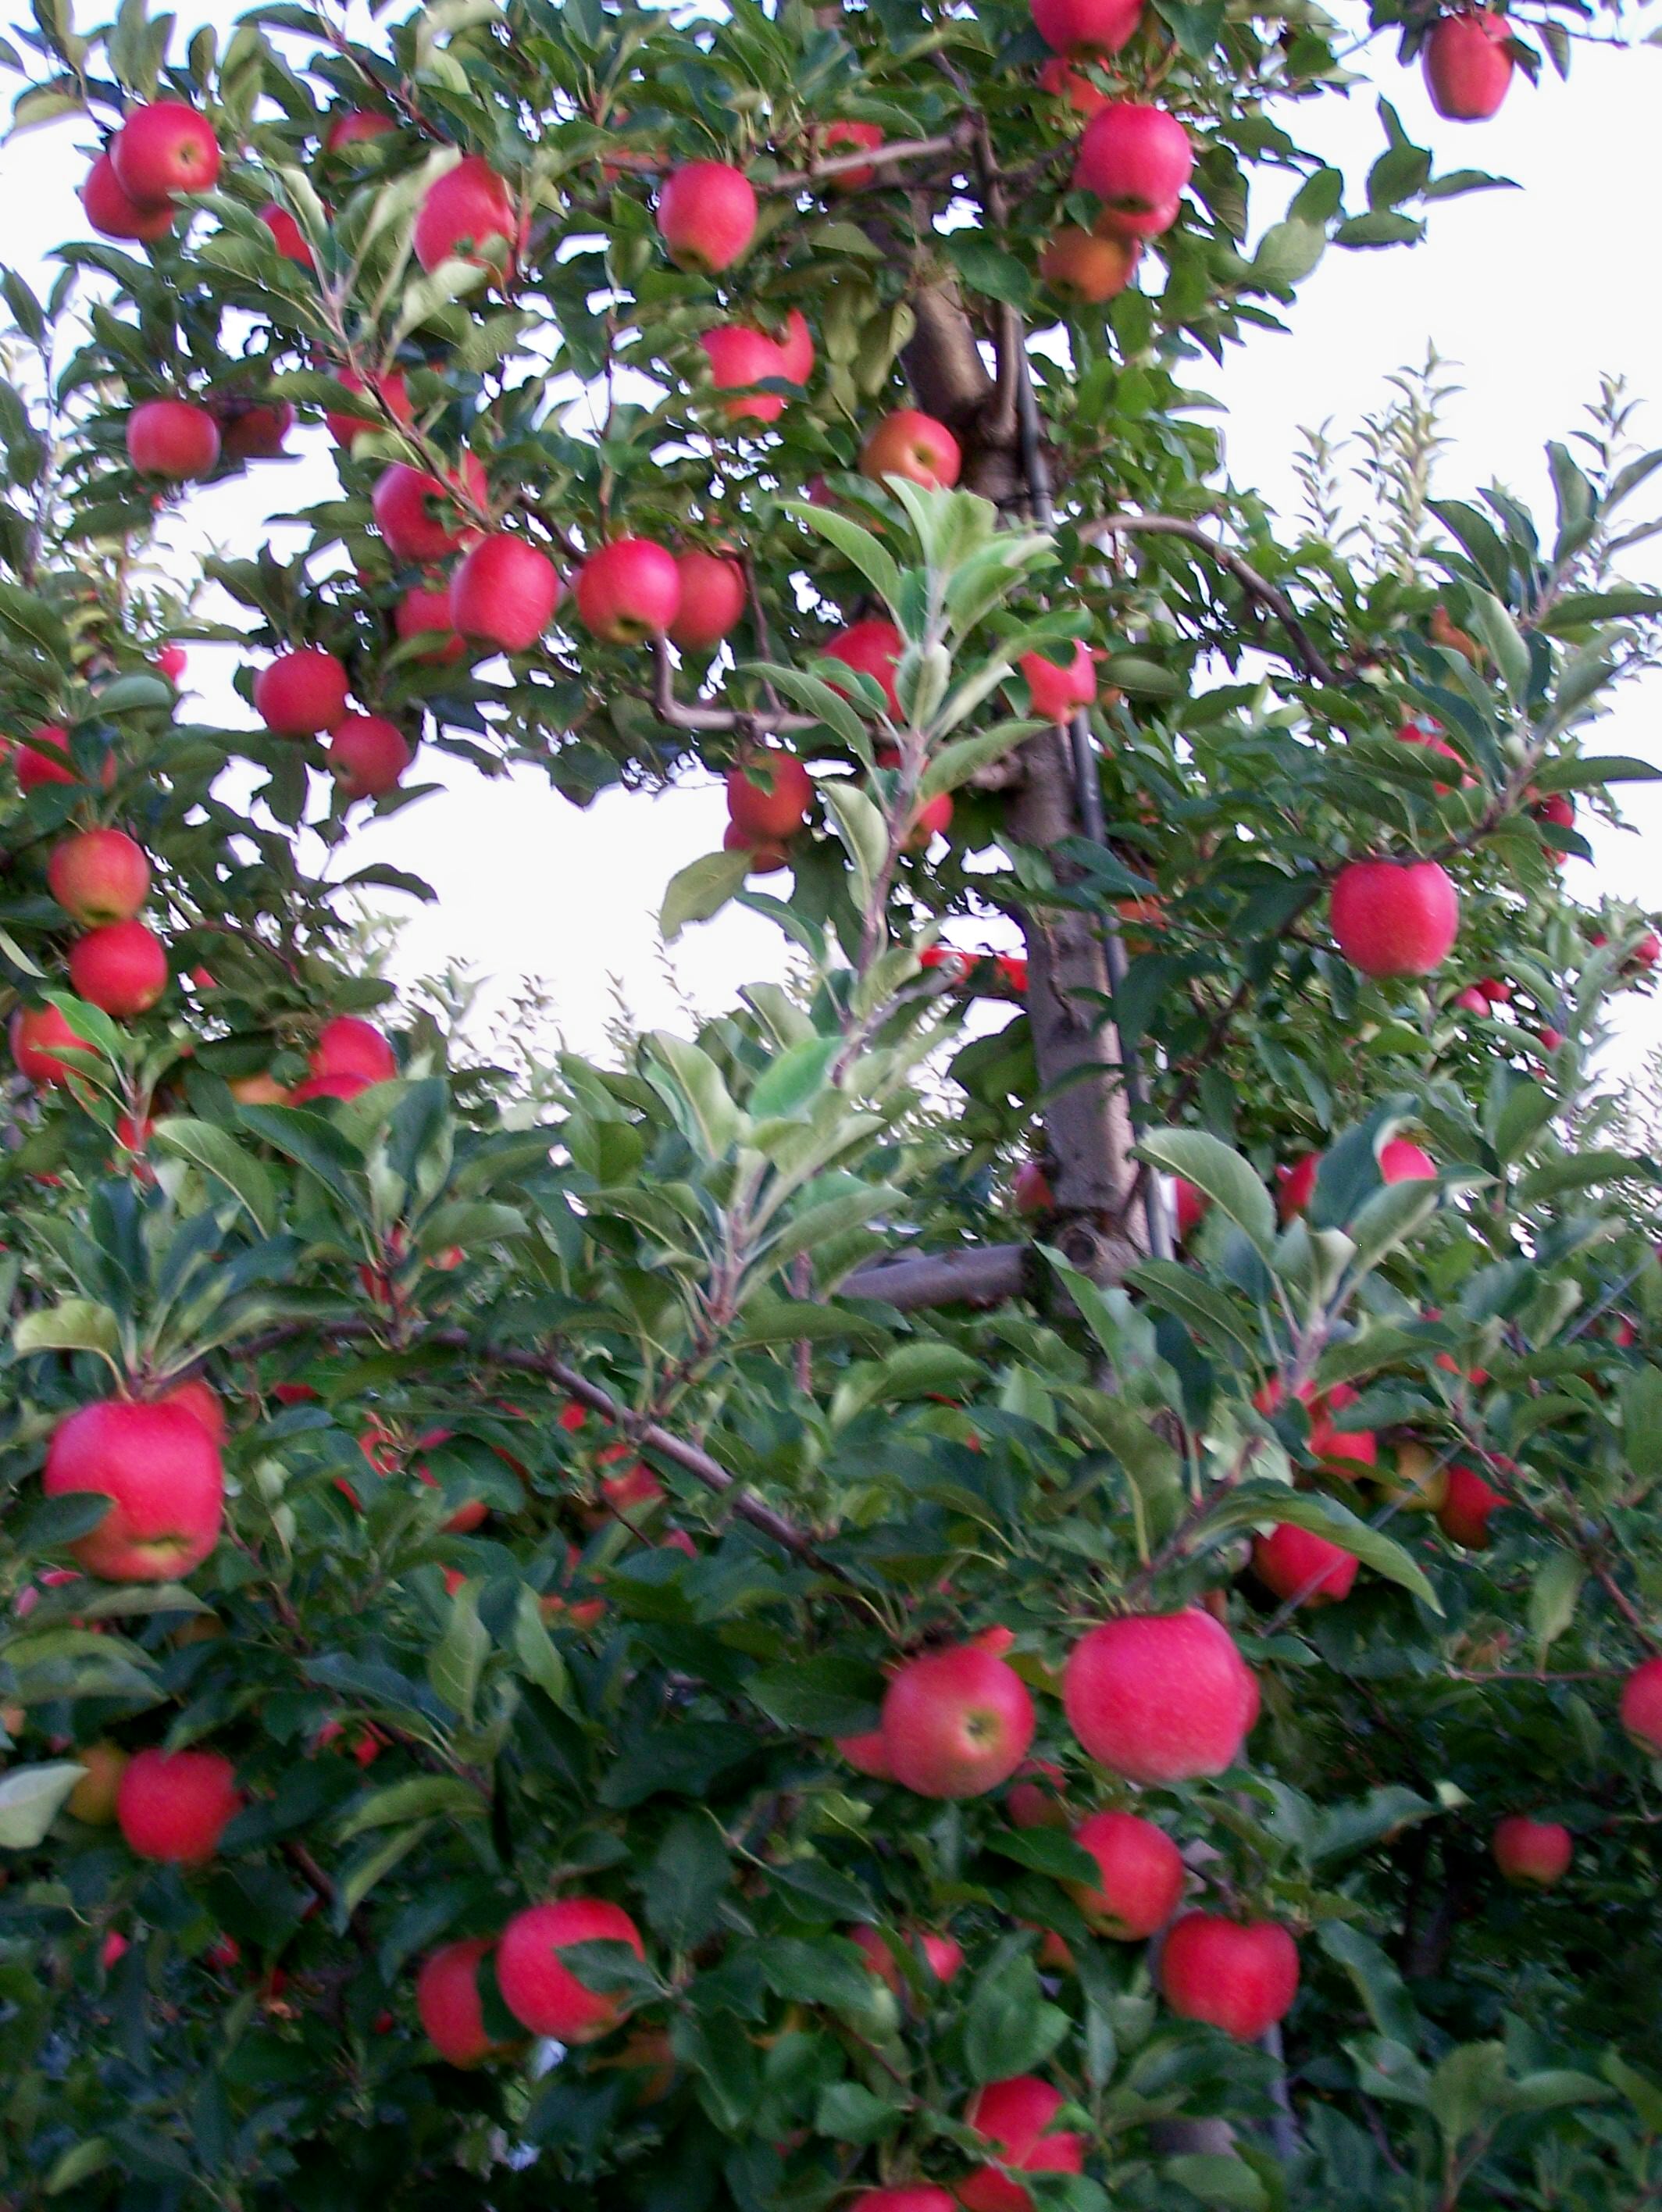 Apple Trees at Manoff's; photo by L. Goldman